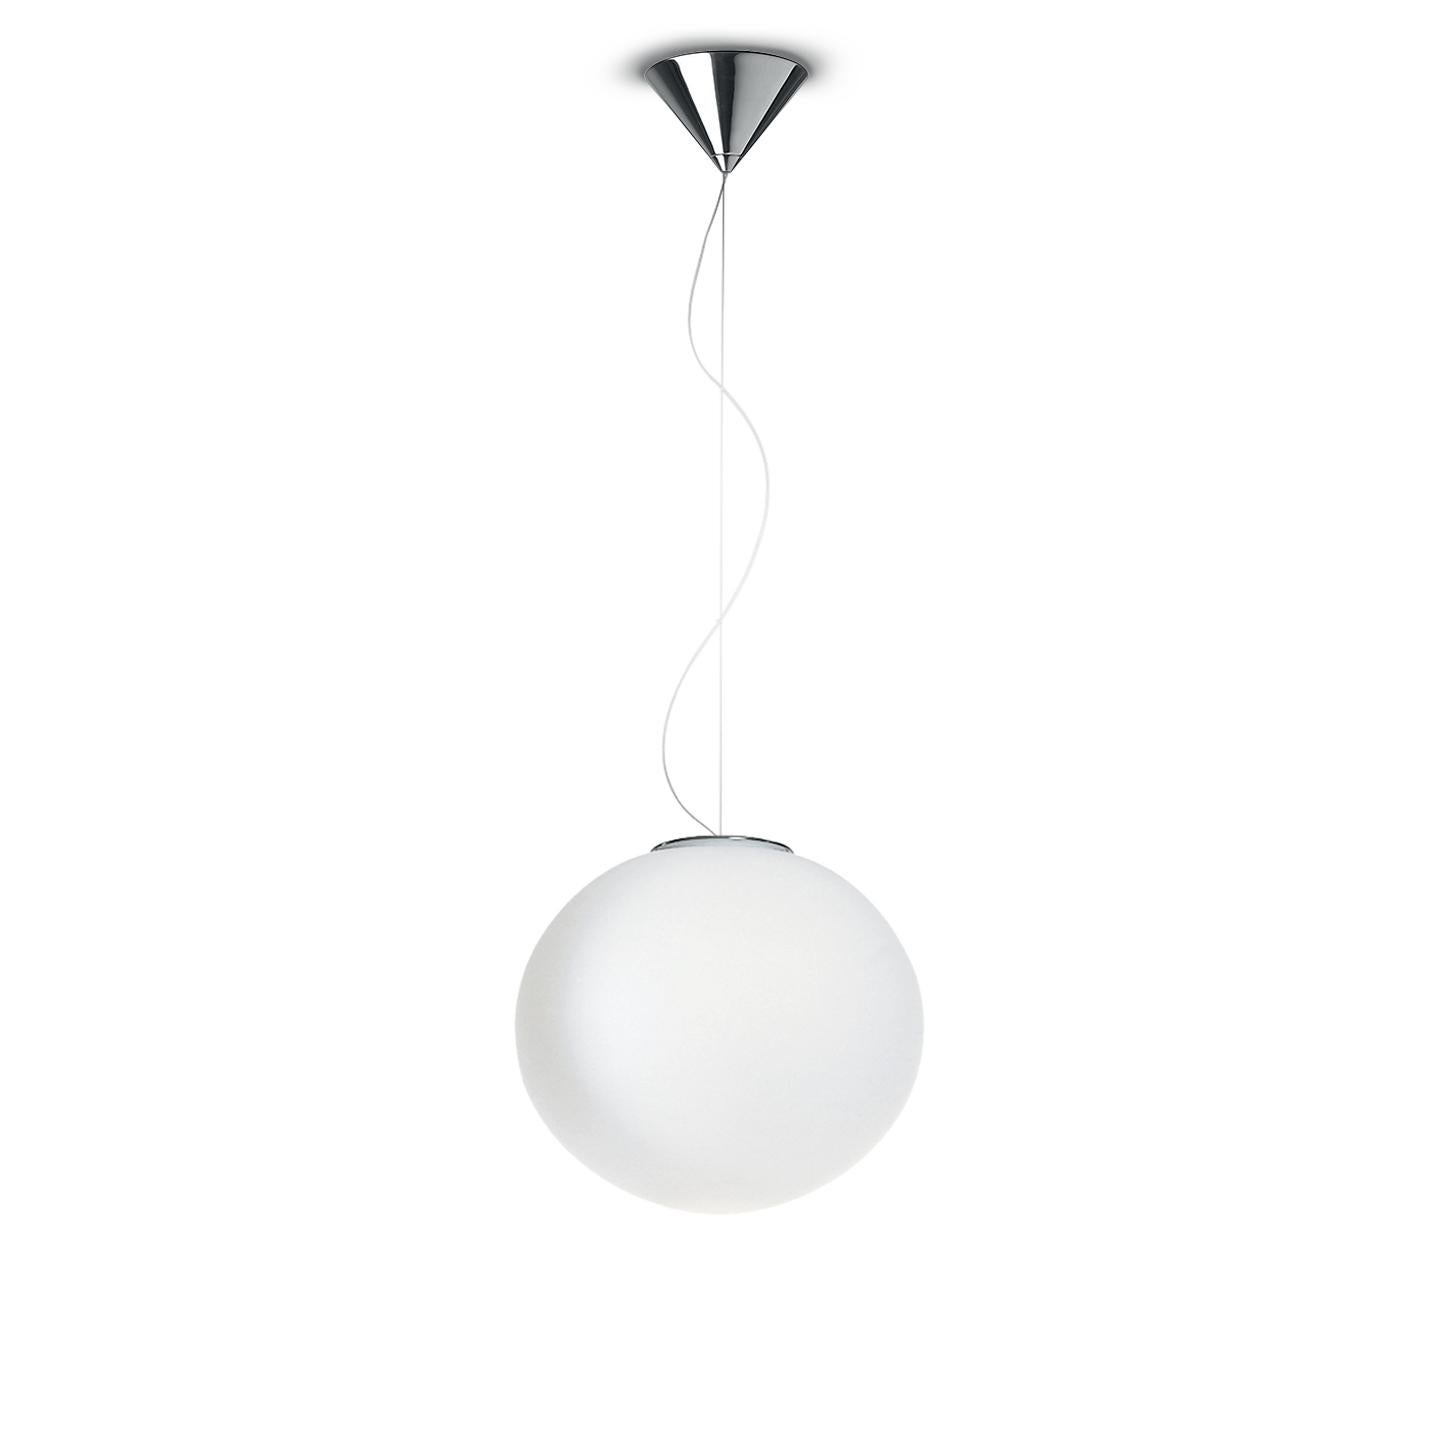 Leucos Sphera S 29 Pendant Light in Satin White and Chrome by Matteo Thun For Sale